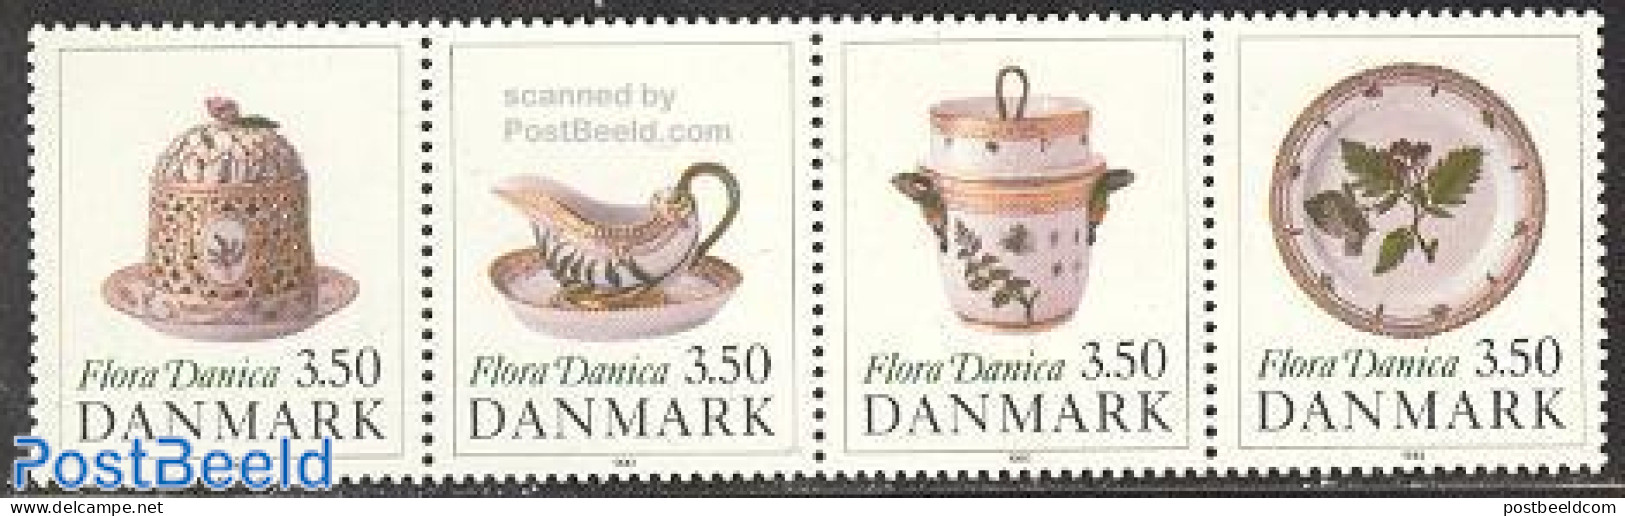 Denmark 1990 Porcelain 4v [:::], Mint NH, Art - Art & Antique Objects - Ceramics - Nuevos